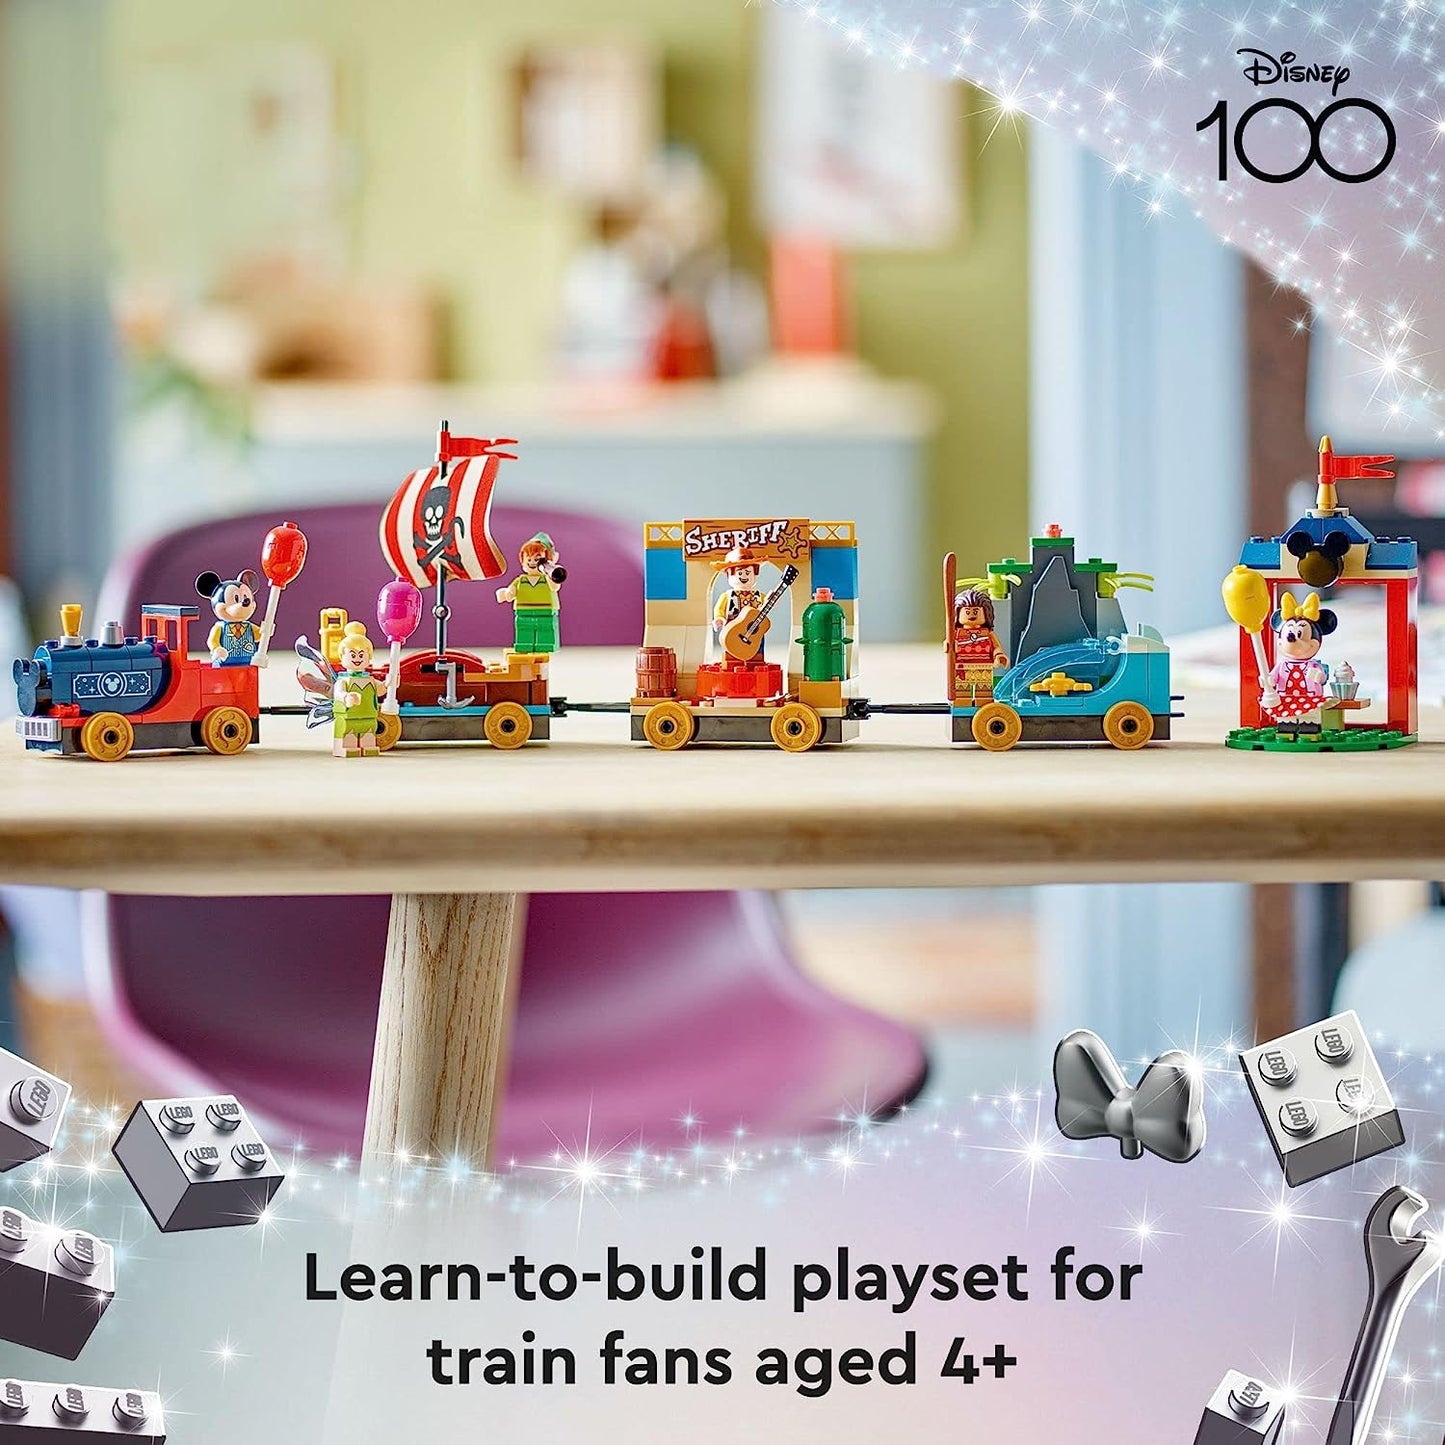 LEGO Disney 100 Celebration Train 43212